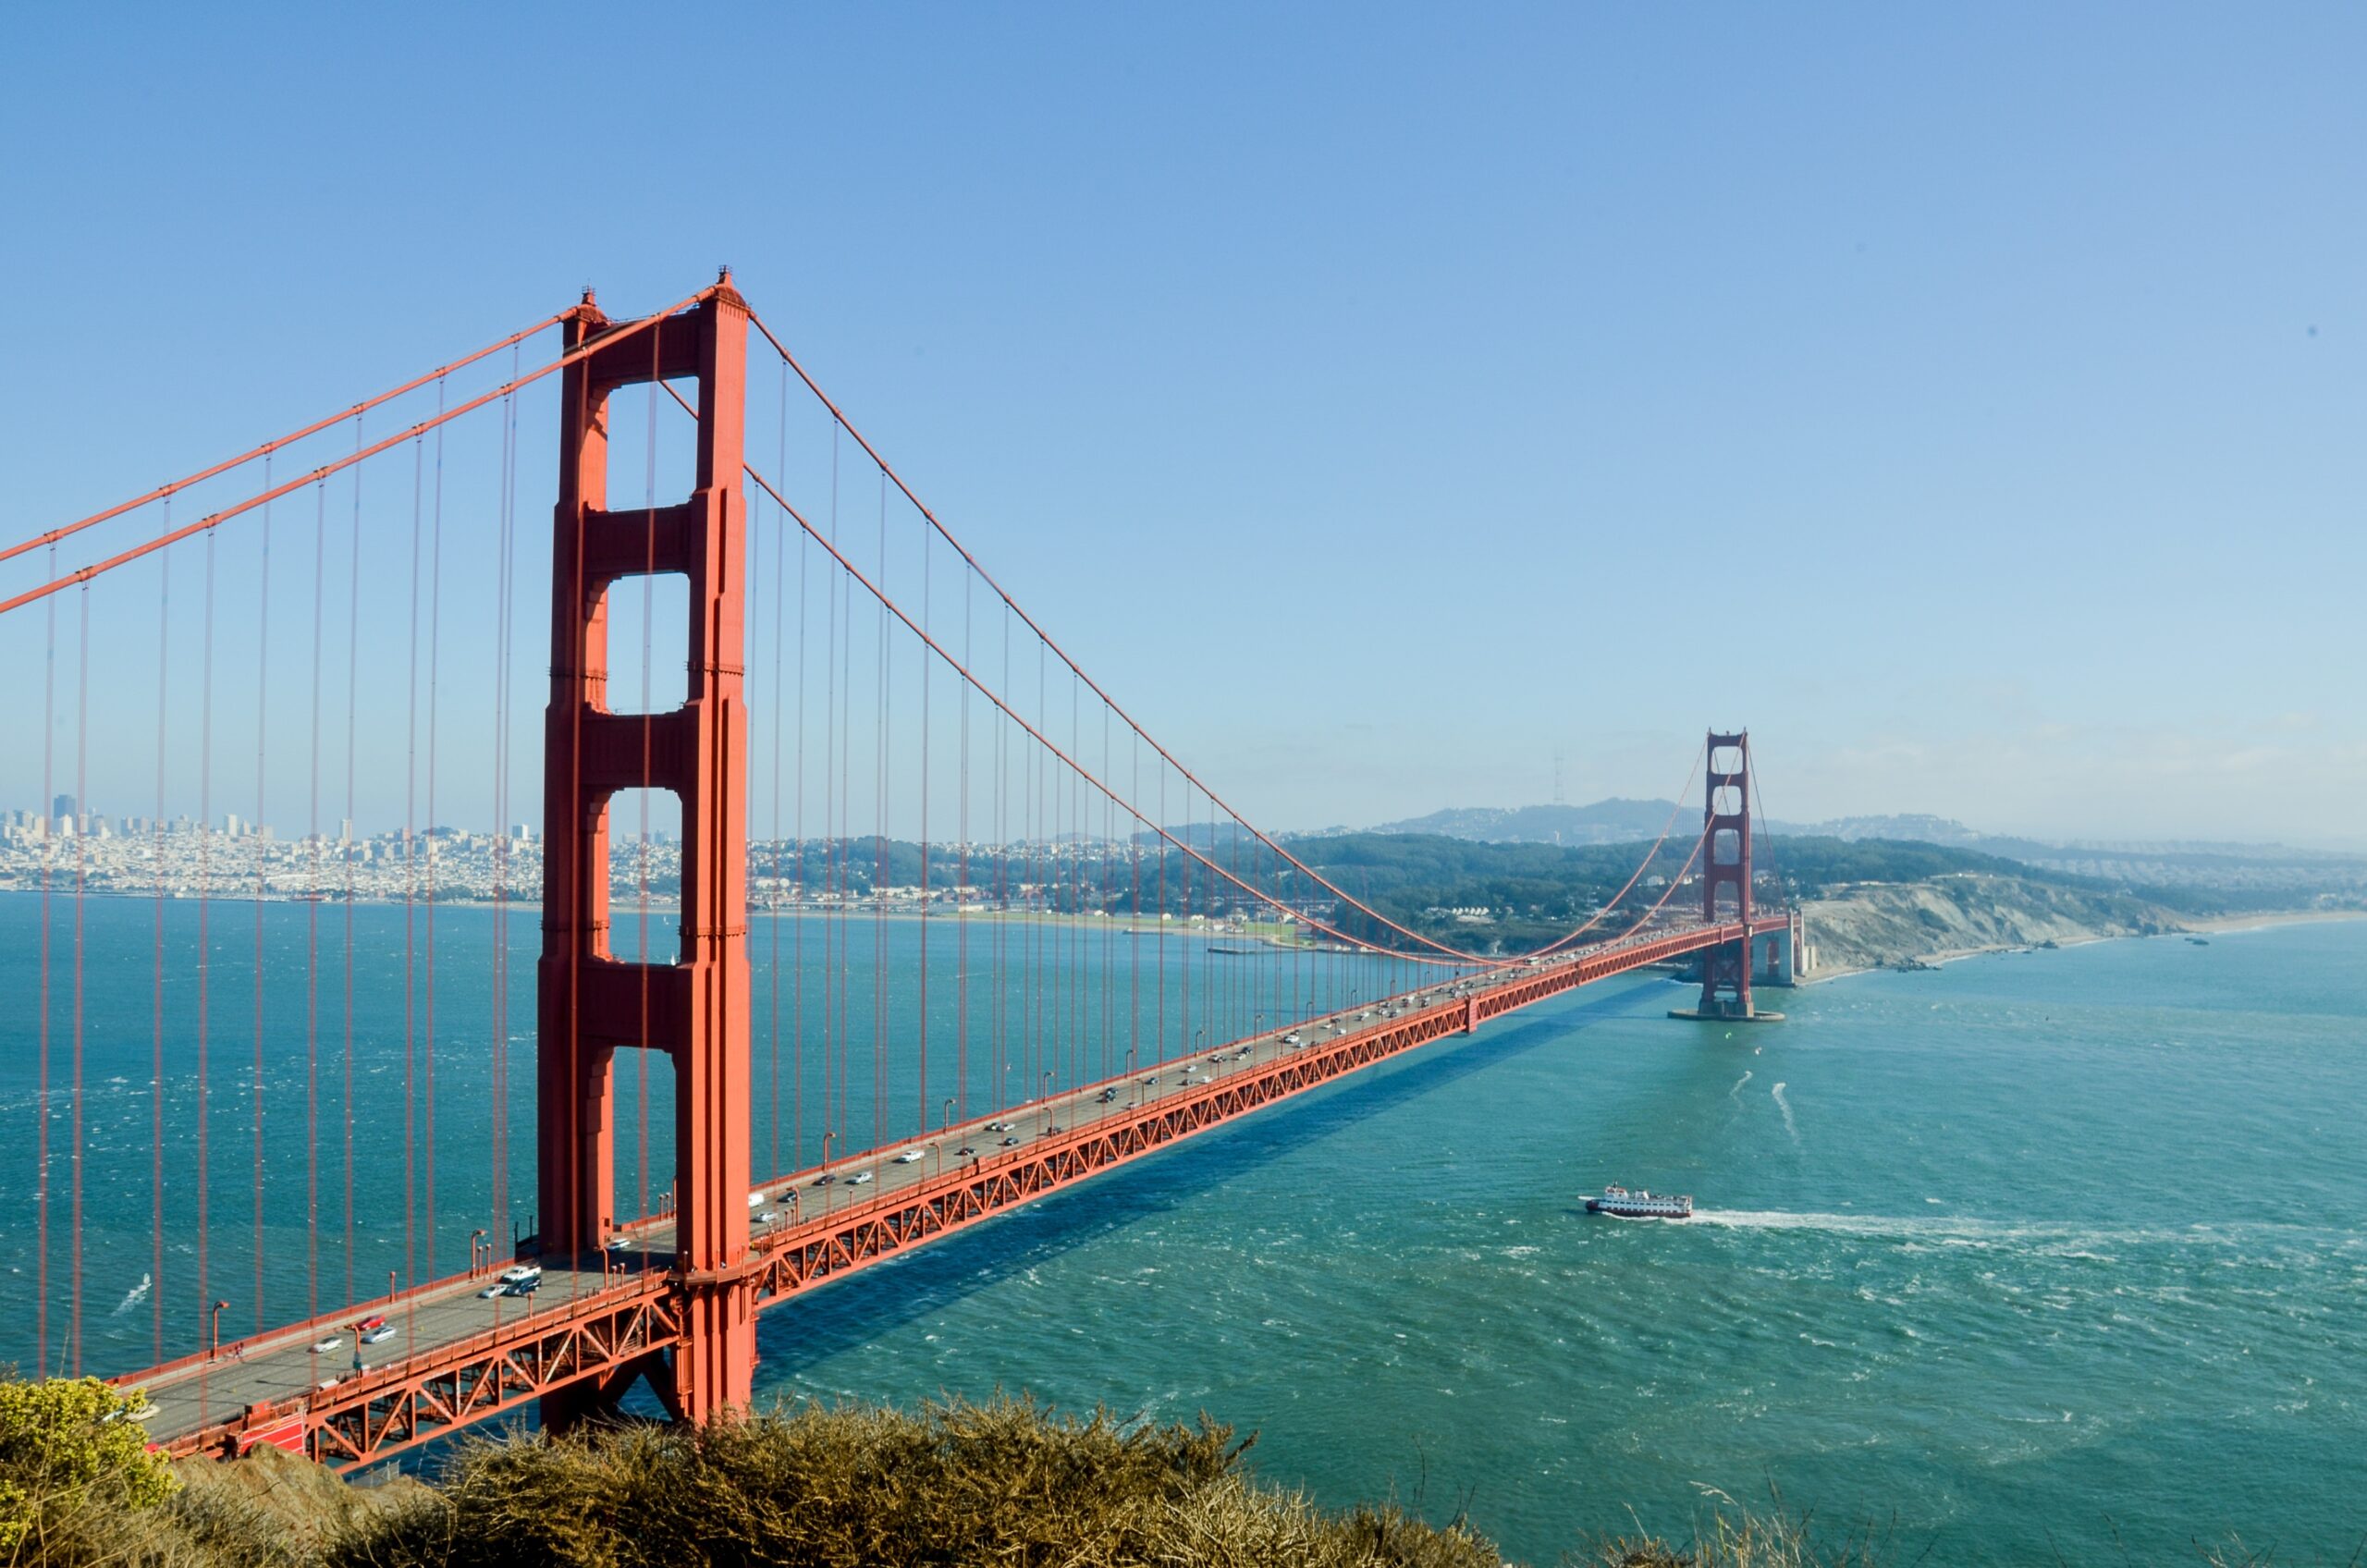 San Francisco Golden Gate Bridge over blue waters.